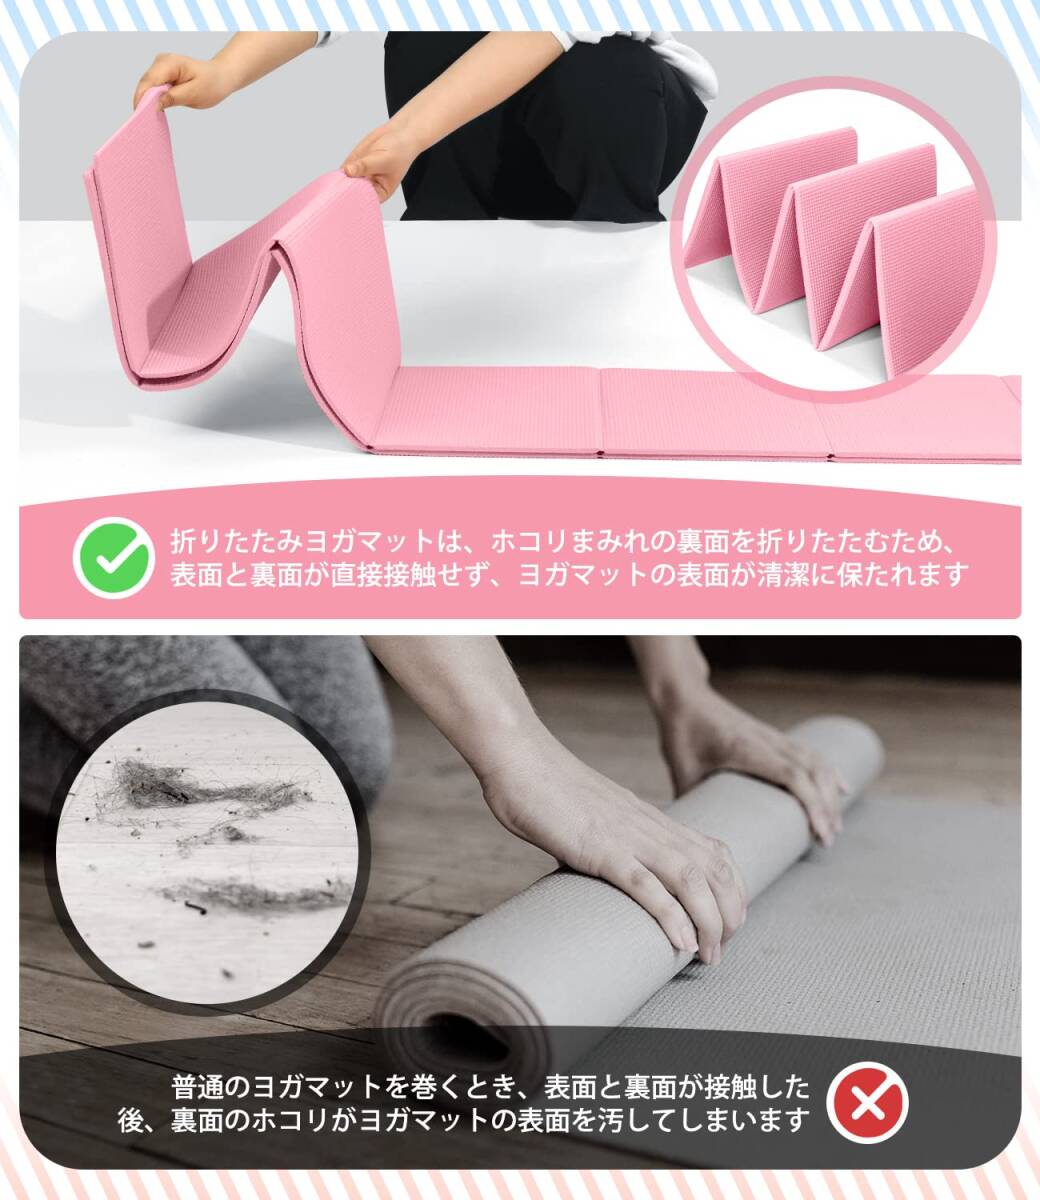  recommendation * yoga mat folding 6mm durability eminent compact design 